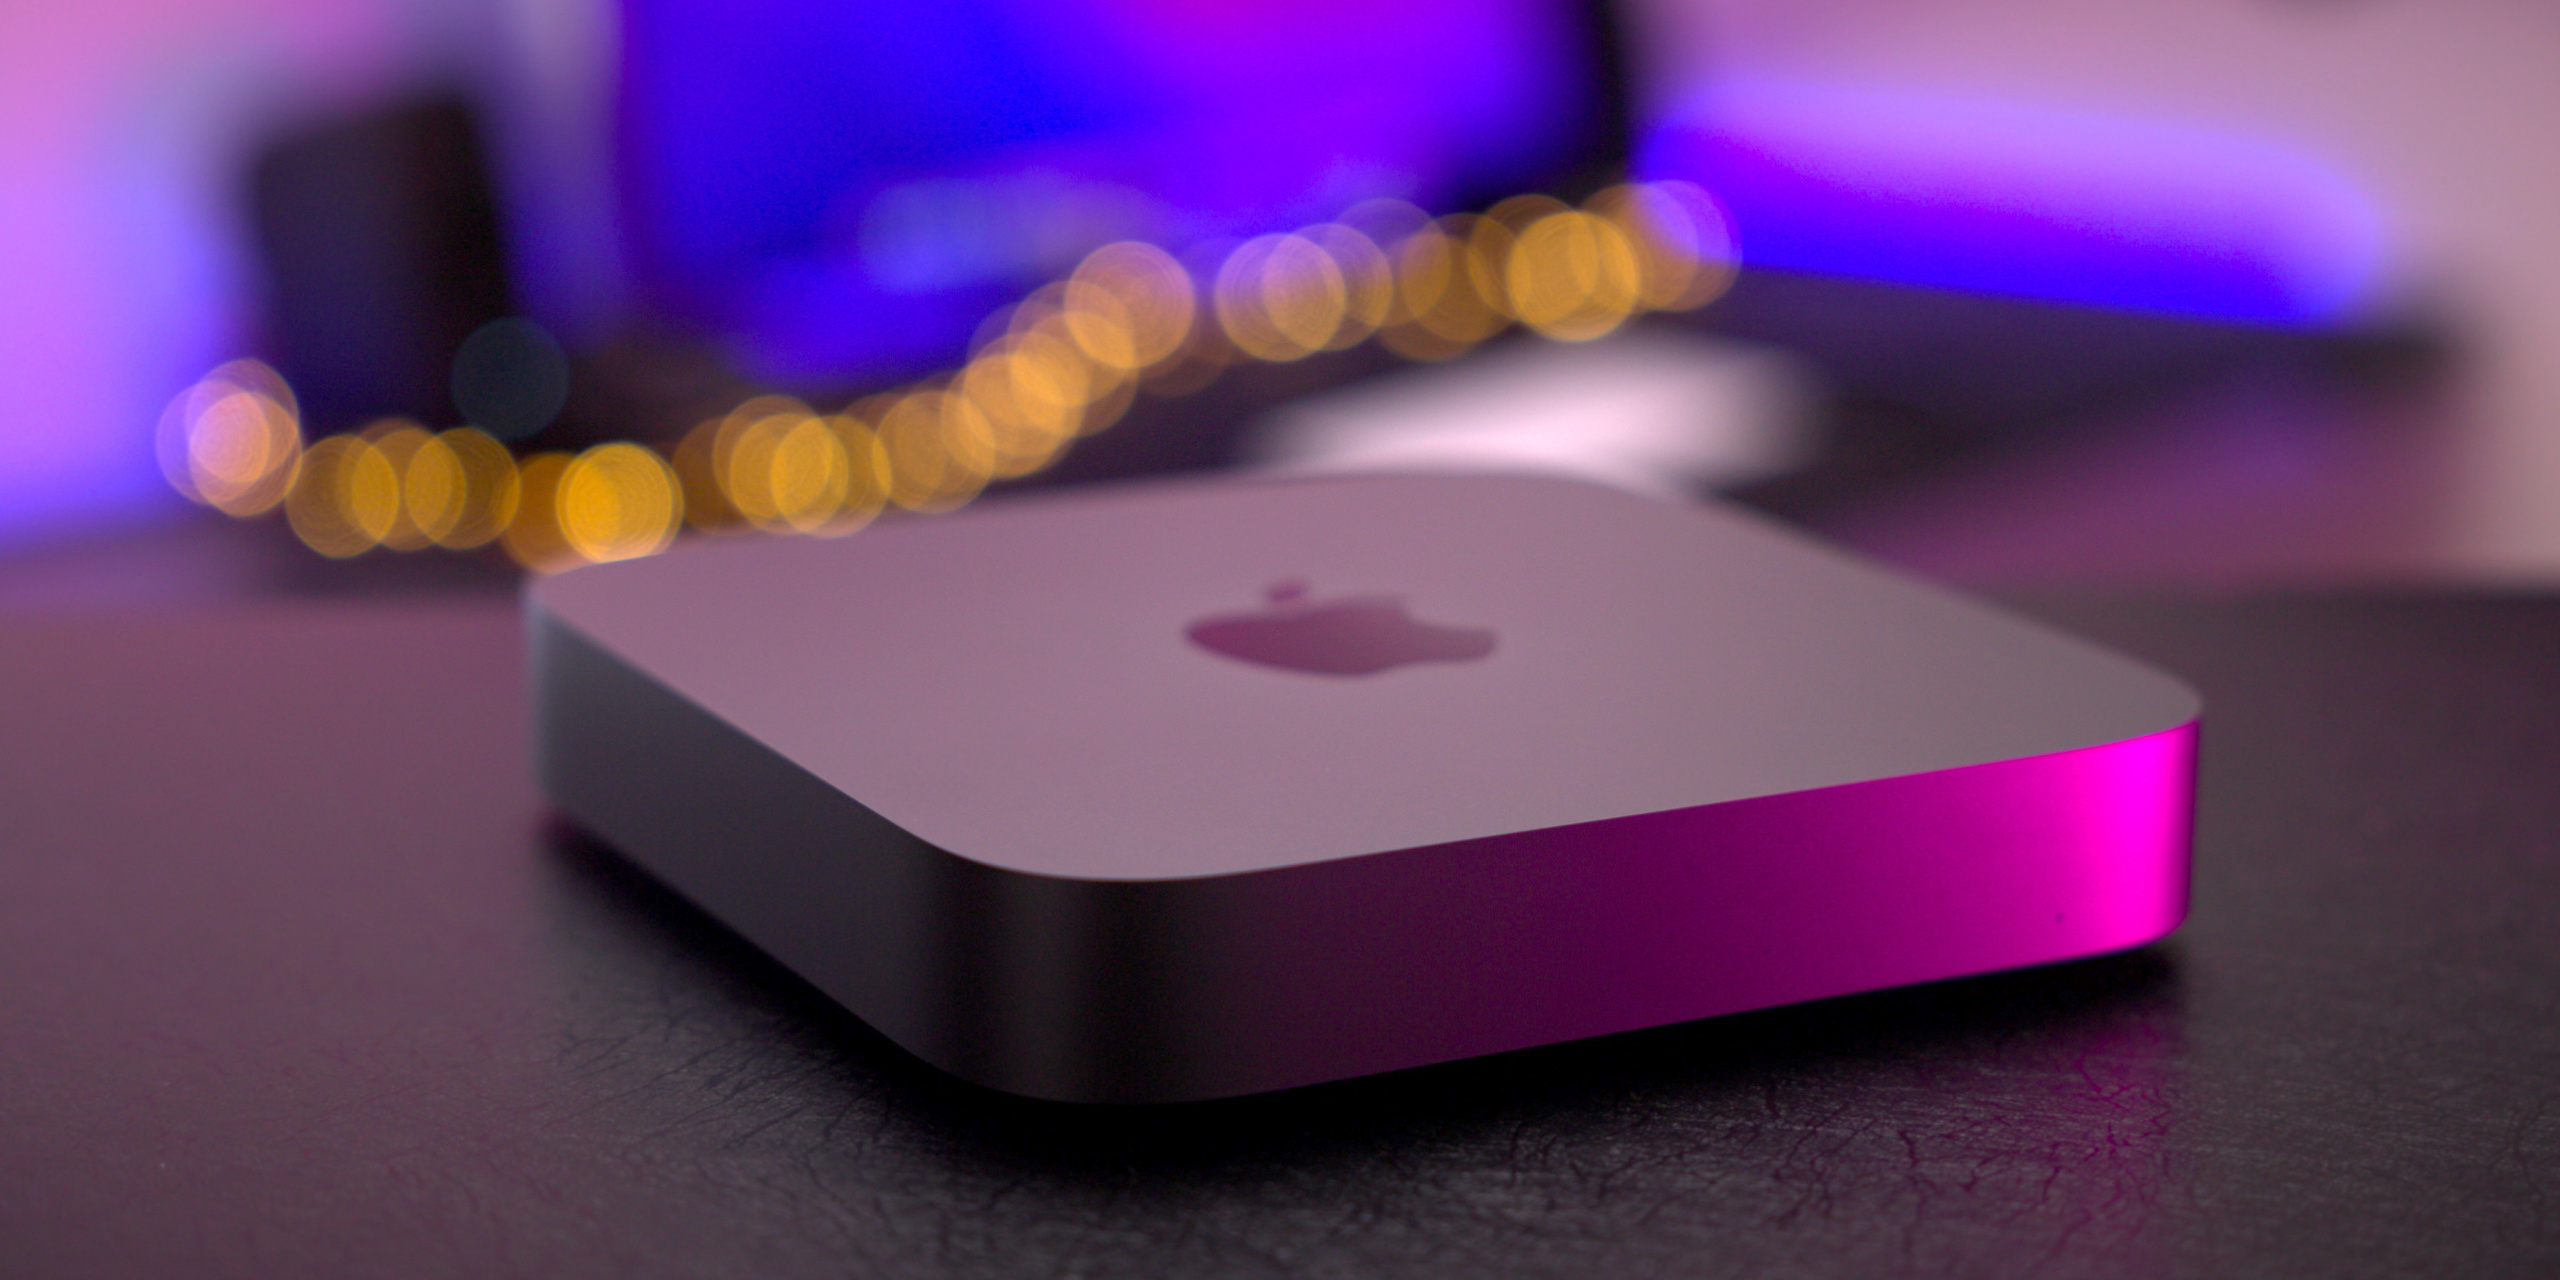 Mac Studio is coming – is it the pro Mac mini or mini Mac Pro? - 9to5Mac